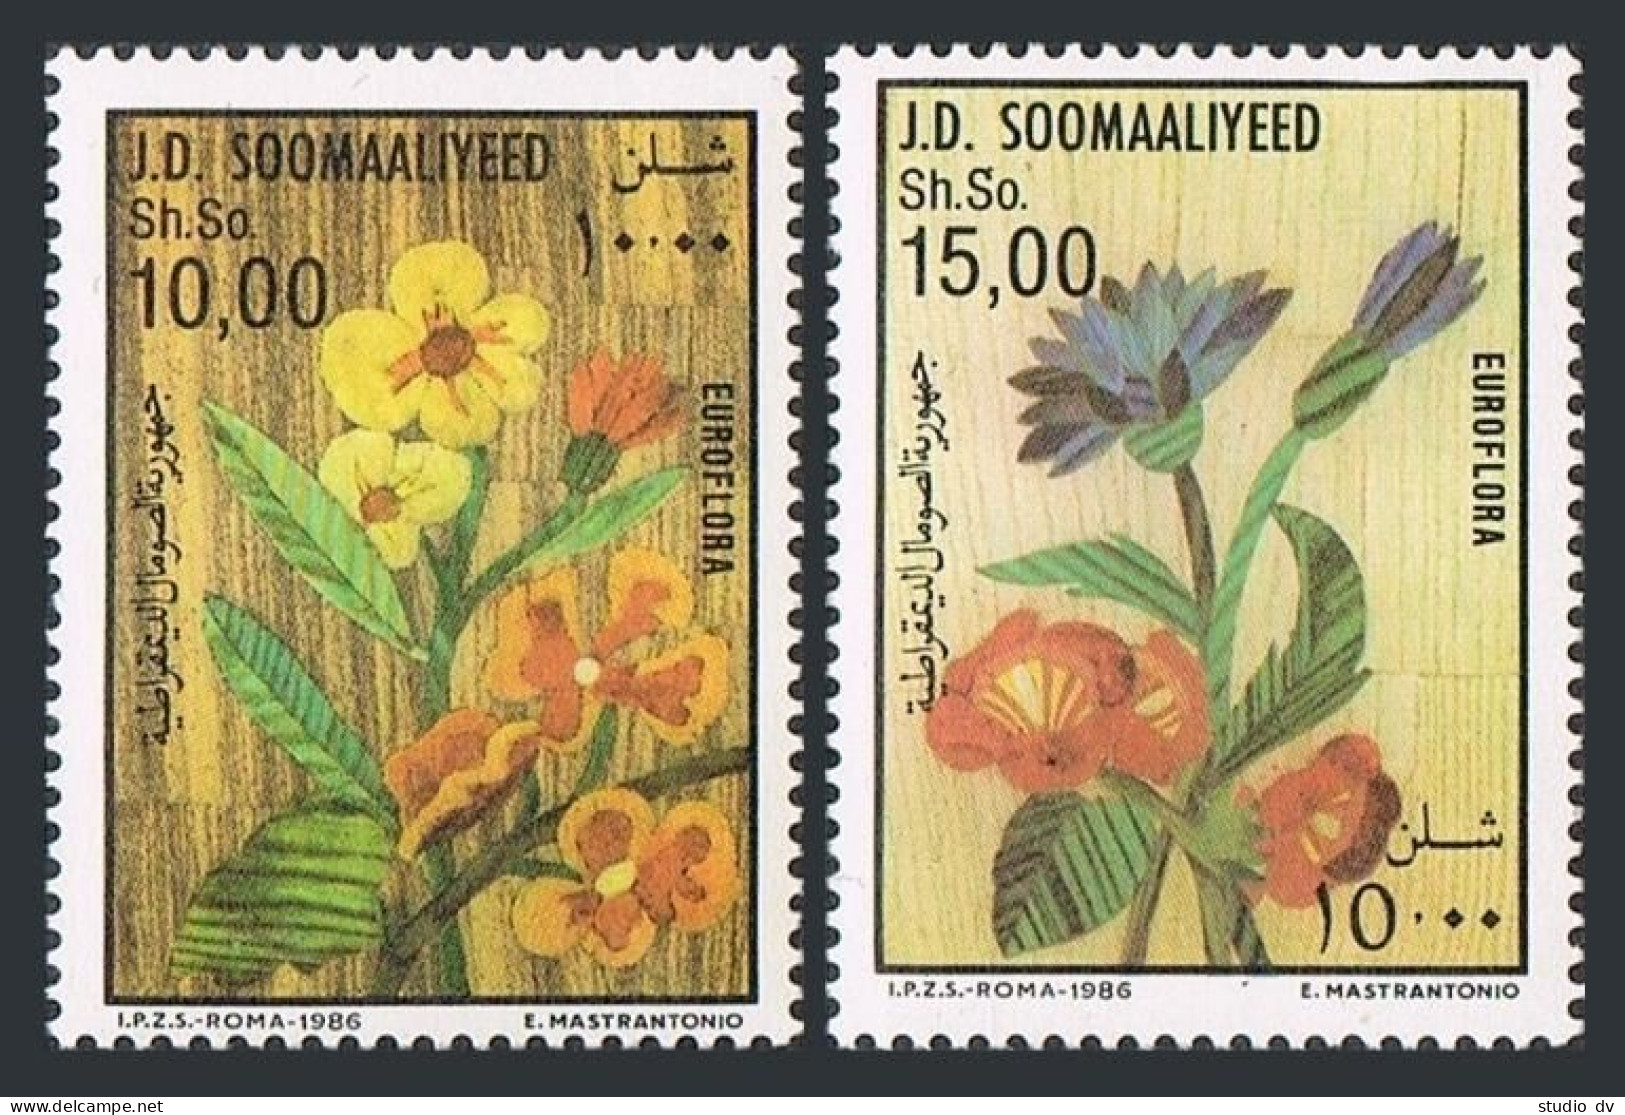 Somalia 564-565,MNH.Michel 384-385. EUROFLORA-1986 Flower Exhibition,Genoa. - Somalie (1960-...)